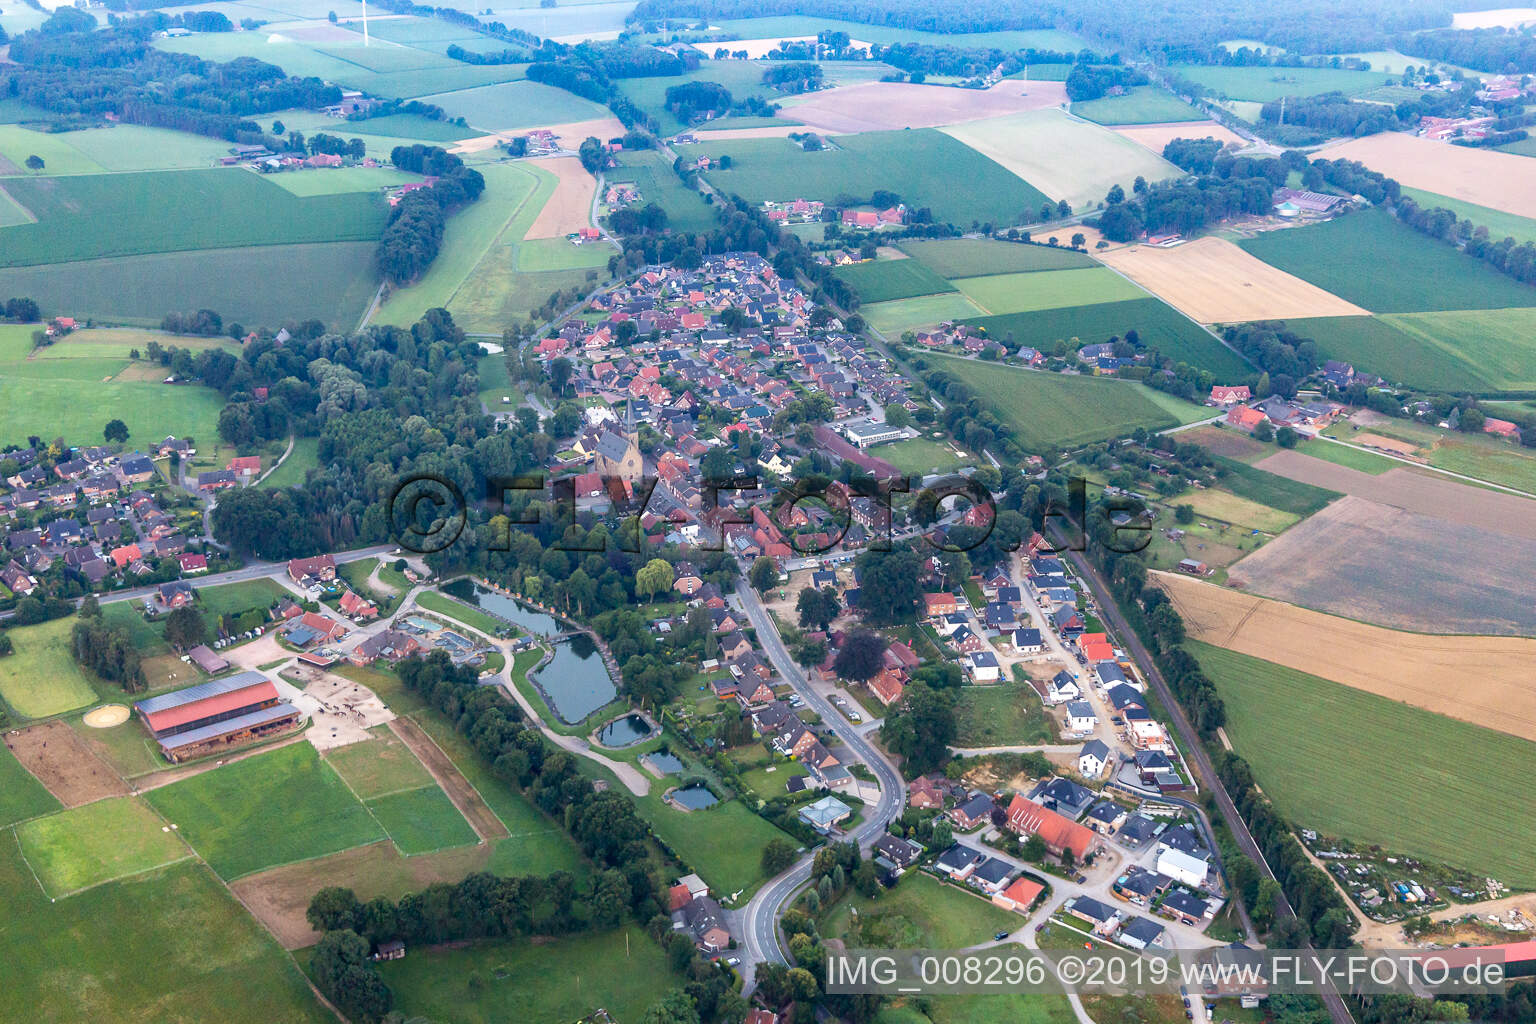 Oblique view of Klein Reken in the state North Rhine-Westphalia, Germany